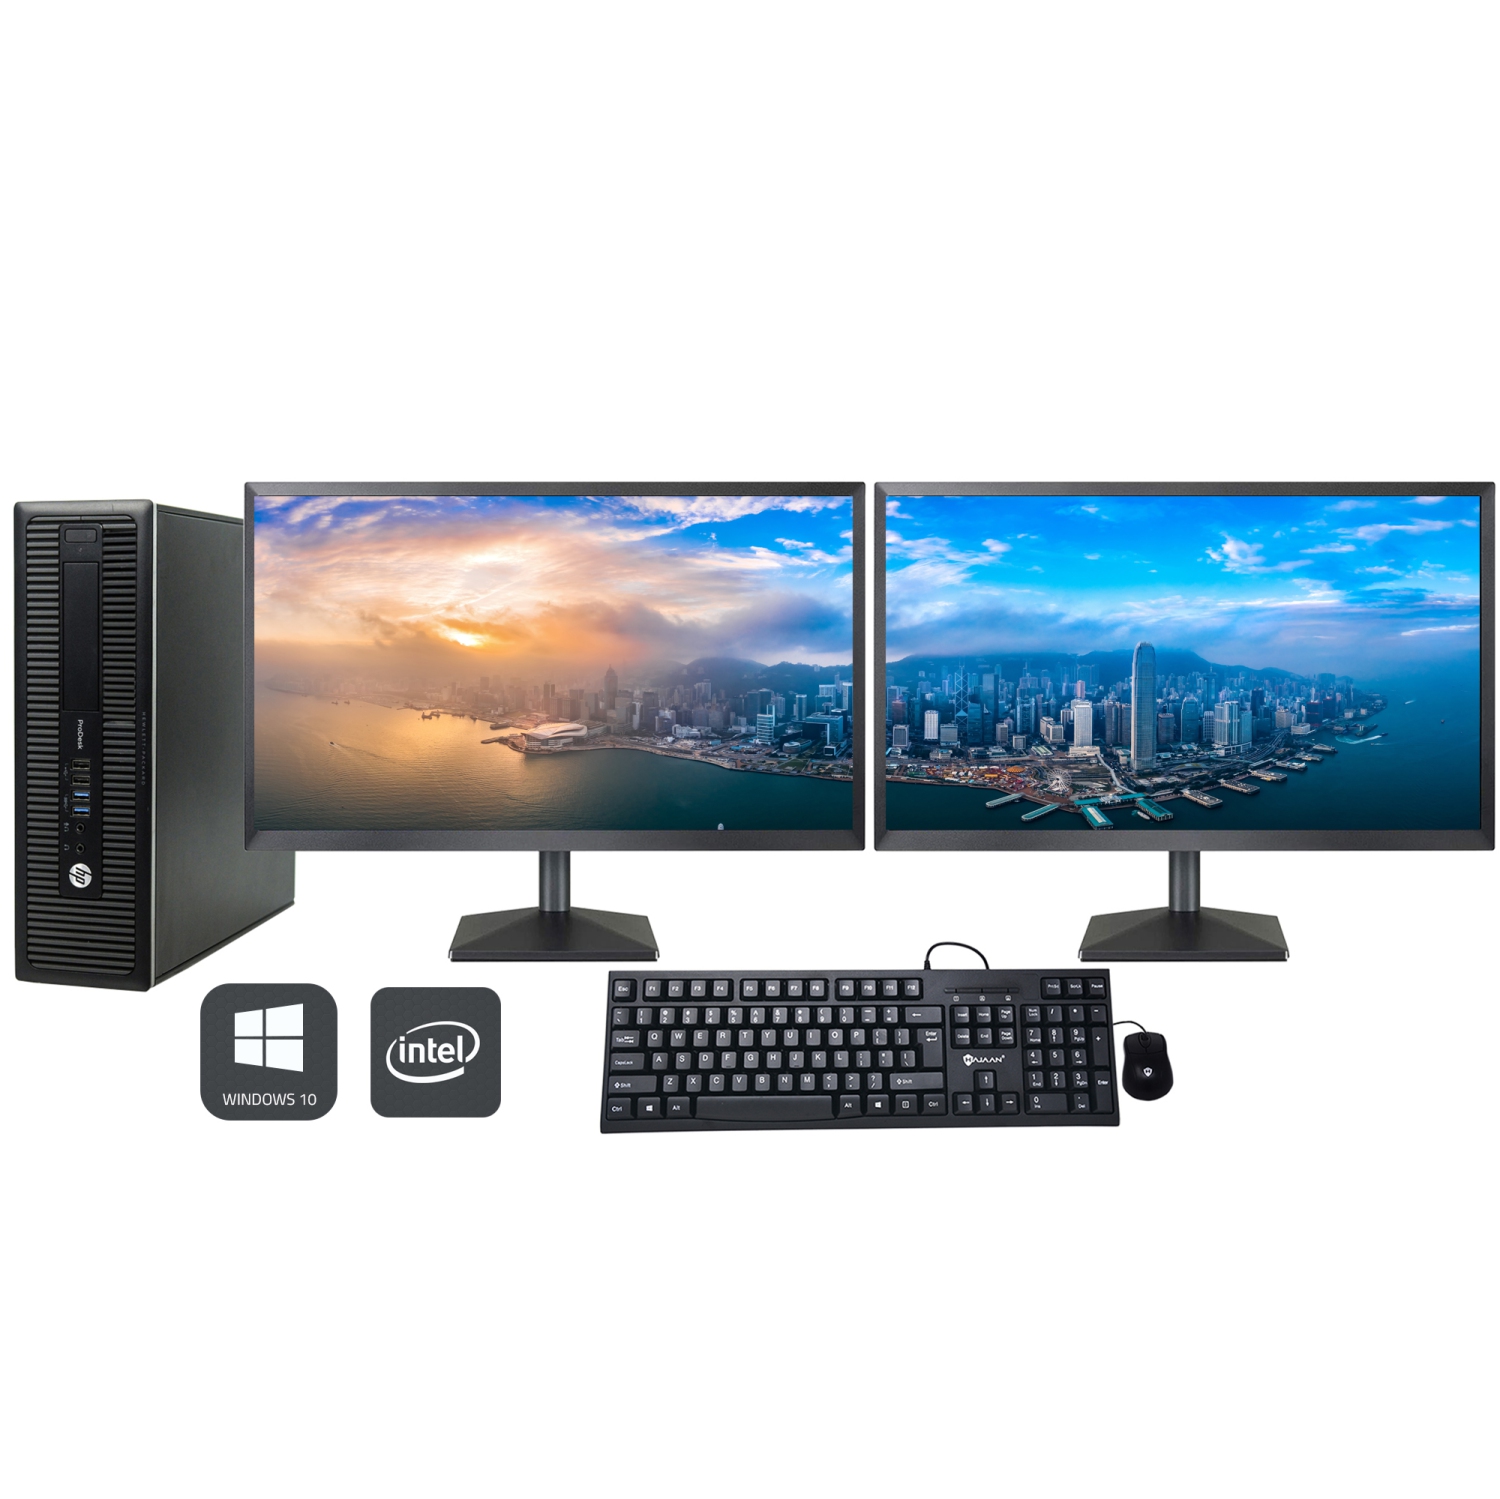 Refurbished (Good) - HP ProDesk 600 G1 SFF Desktop Computer with Dual (2) 27" Monitor - Intel Core i7-4770 Processor 3.40 GHz 32GB RAM 1TB SSD Windows 10 Pro WiFi